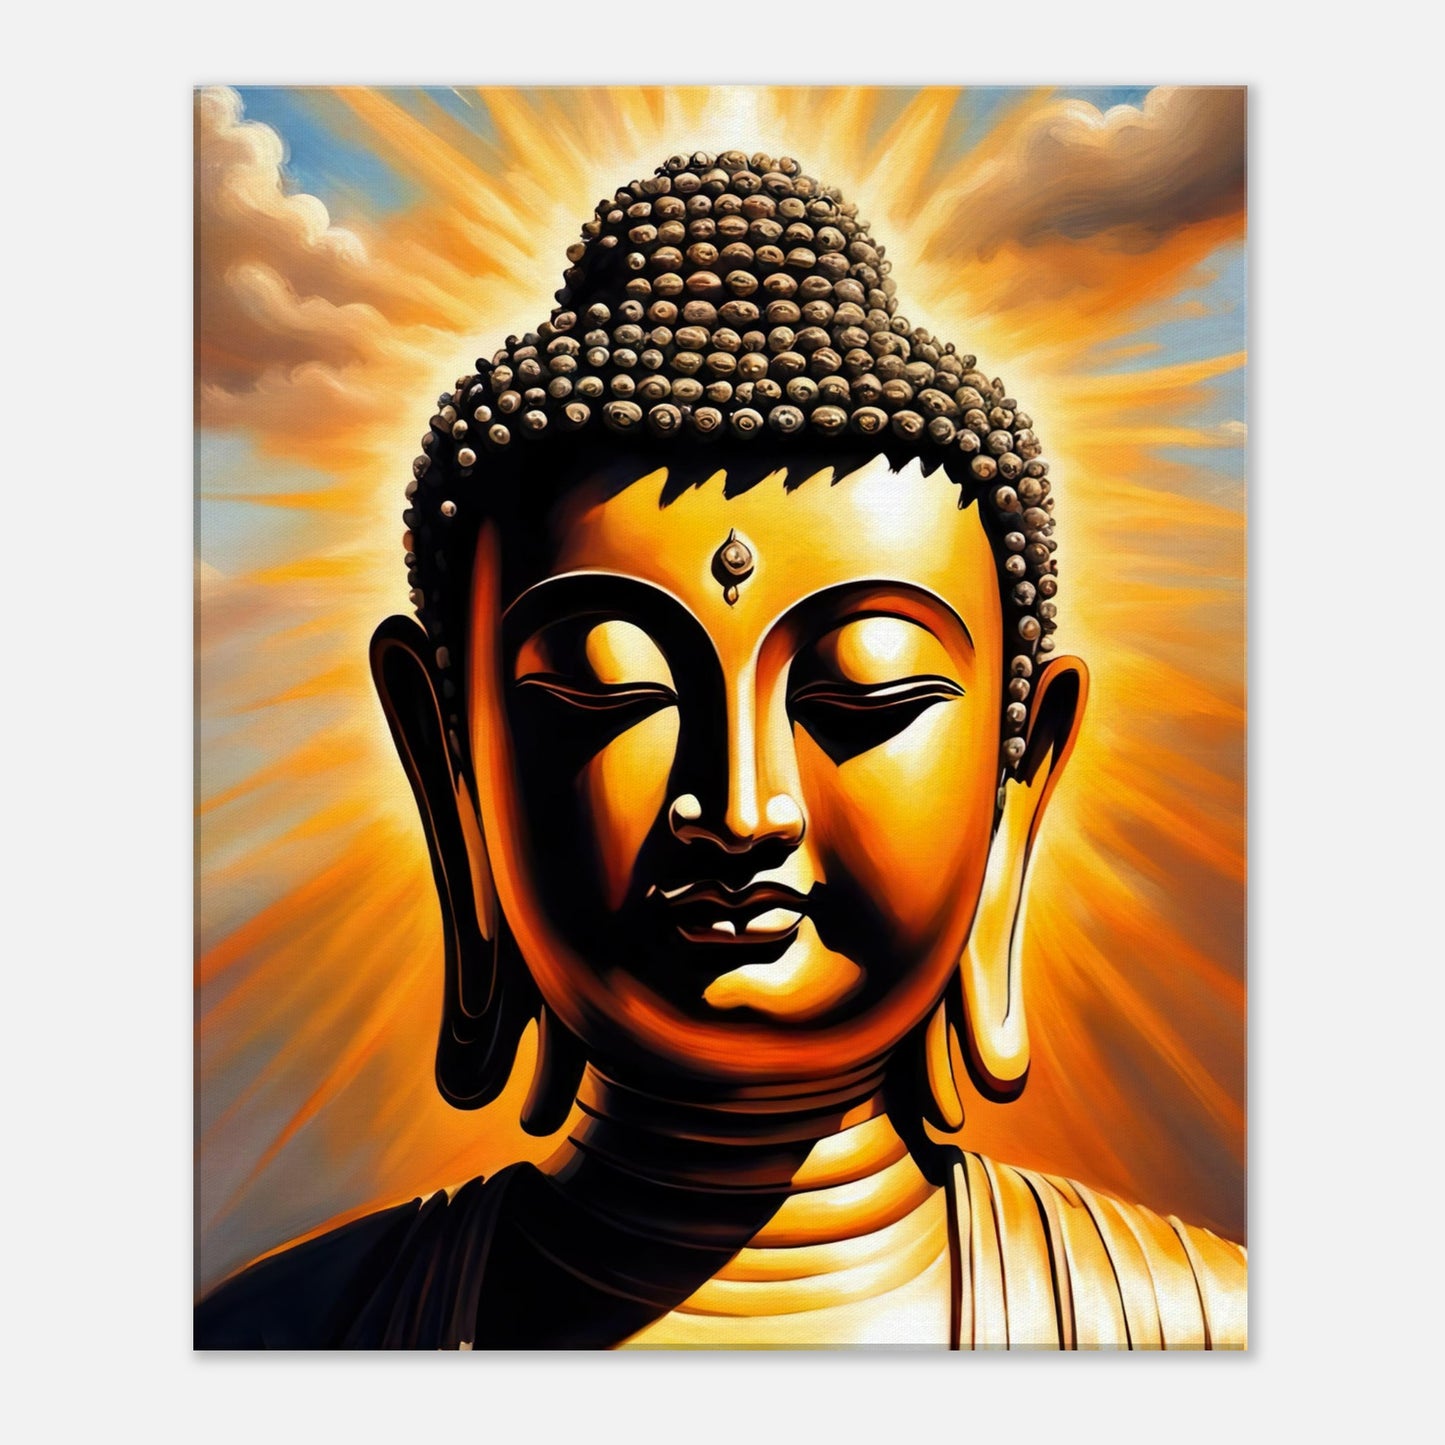 Leinwandbild - Buddha - Malerischer Stil, KI-Kunst - RolConArt, Spirituelle Vielfalt, 50x60-cm-20x24